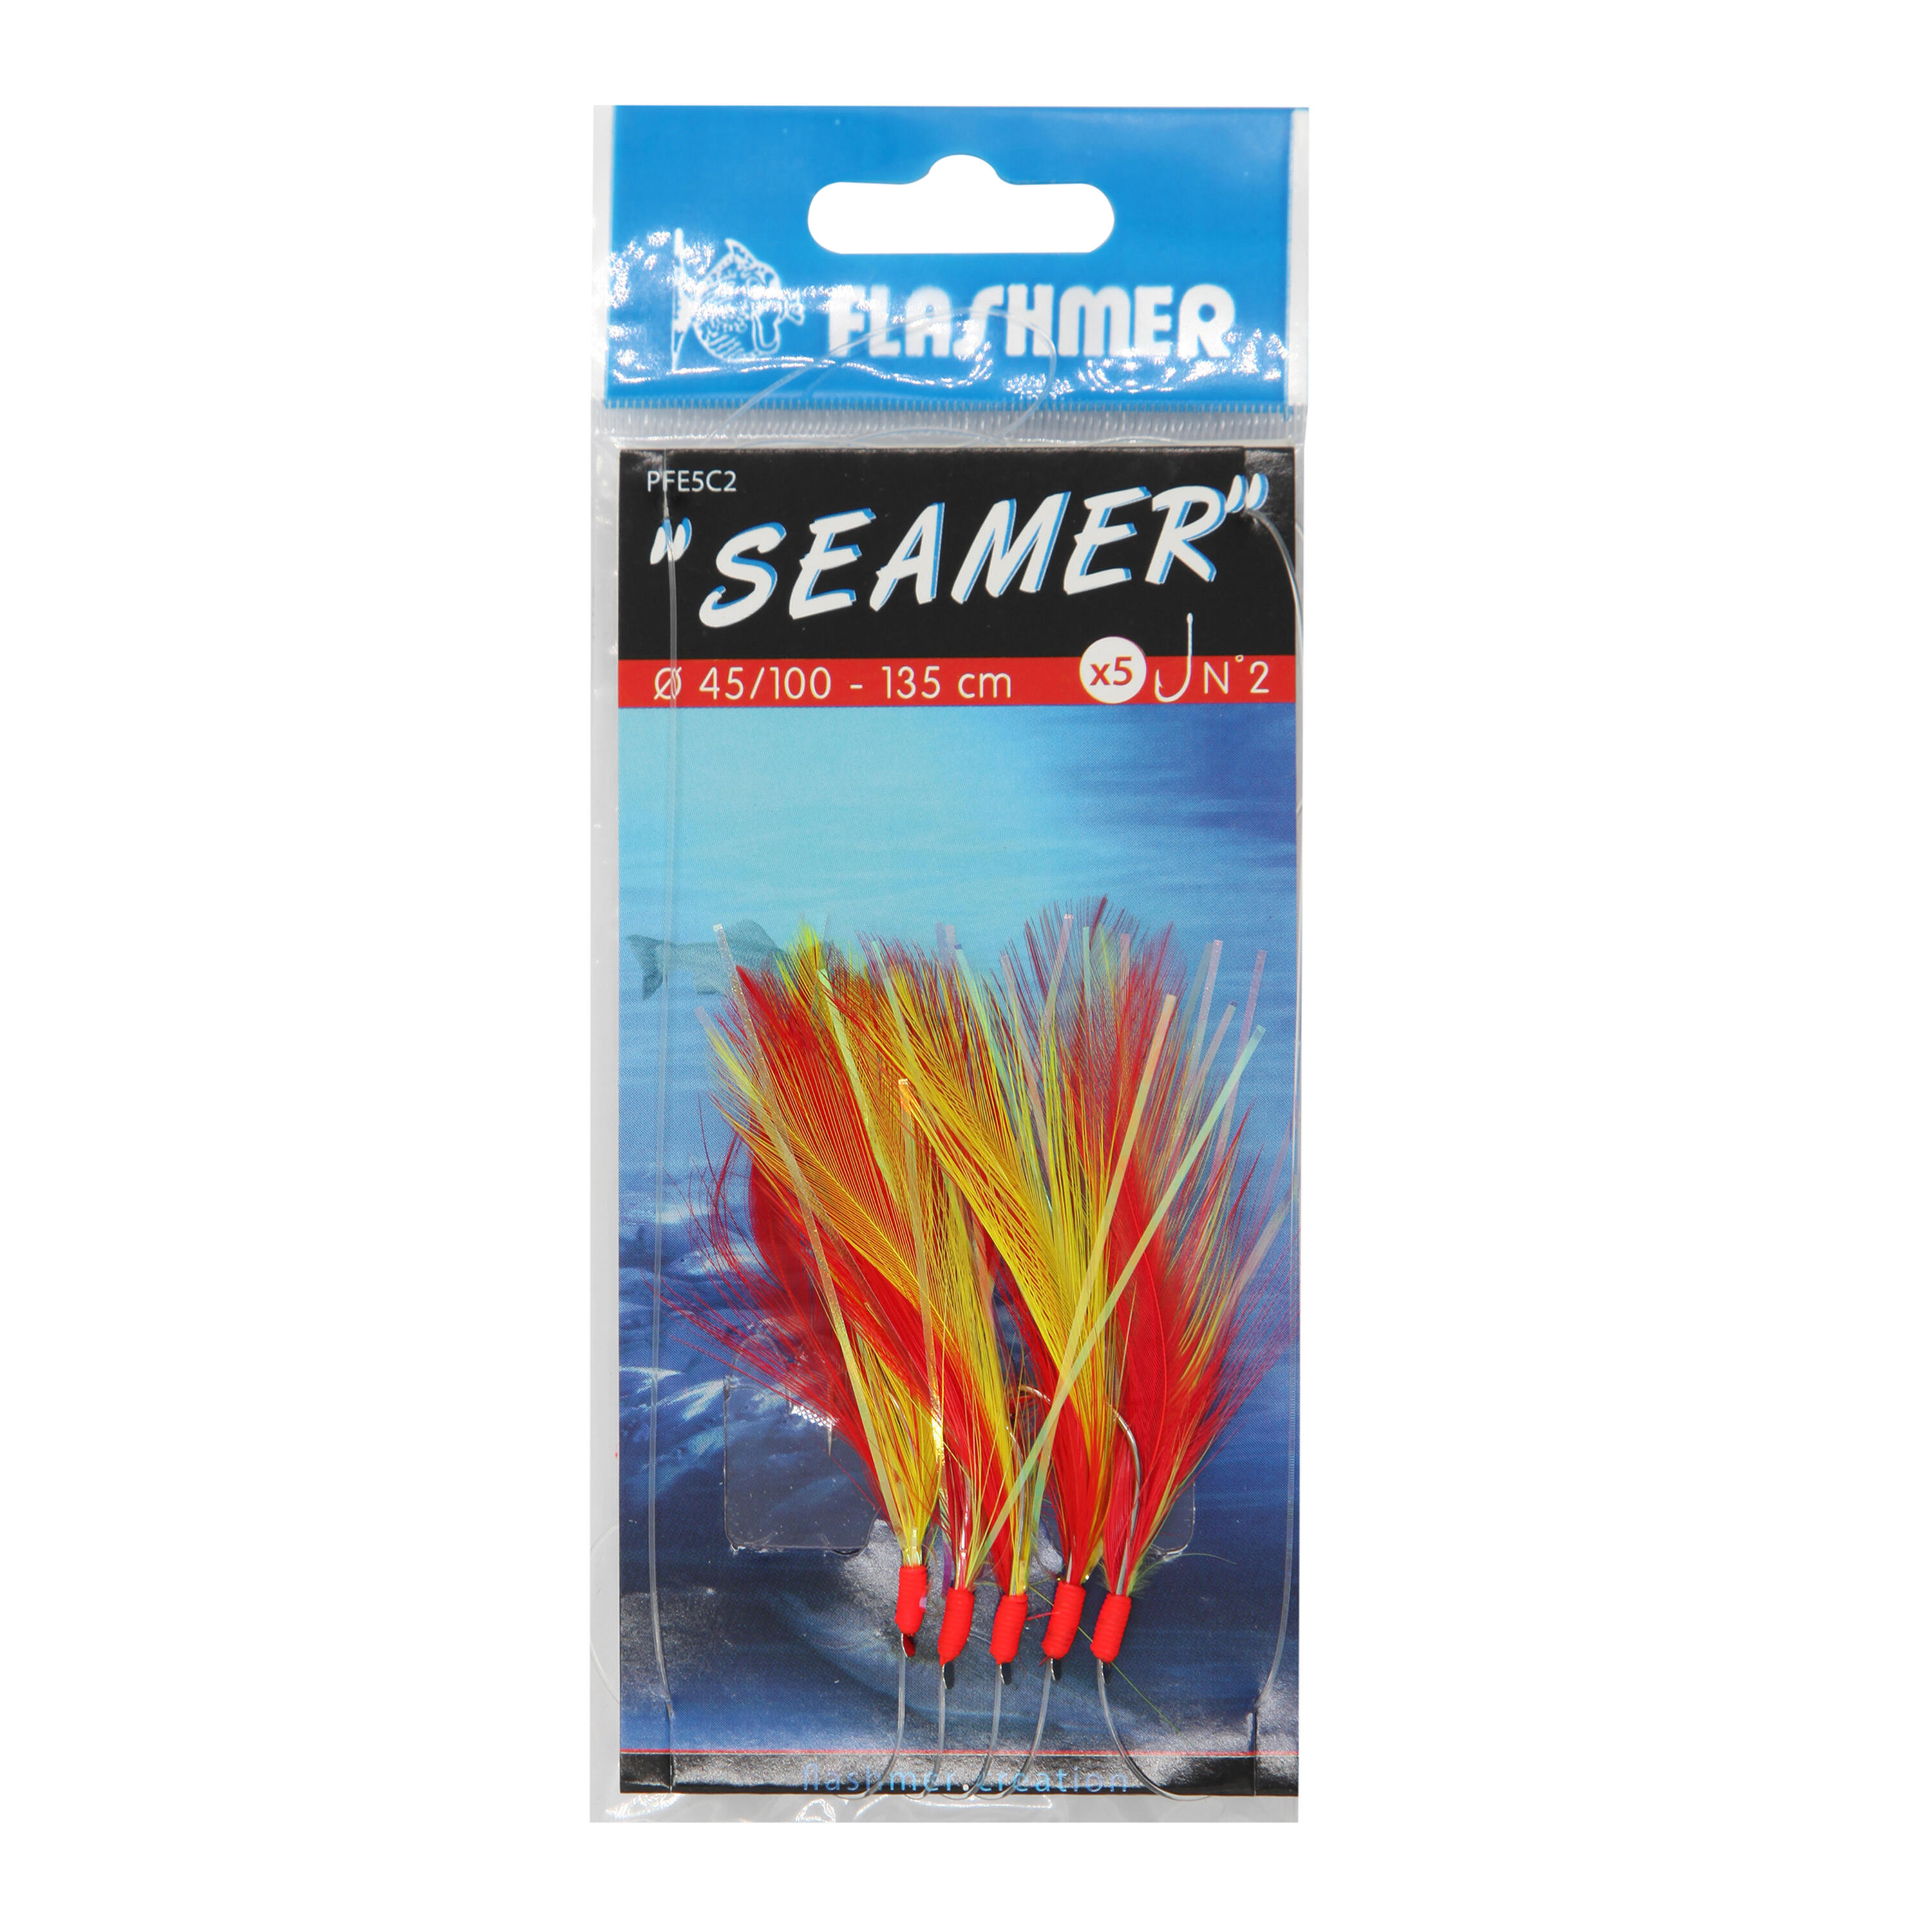 Seamer 5 Sea Fishing Leader N°4 Hooks FLASHMER